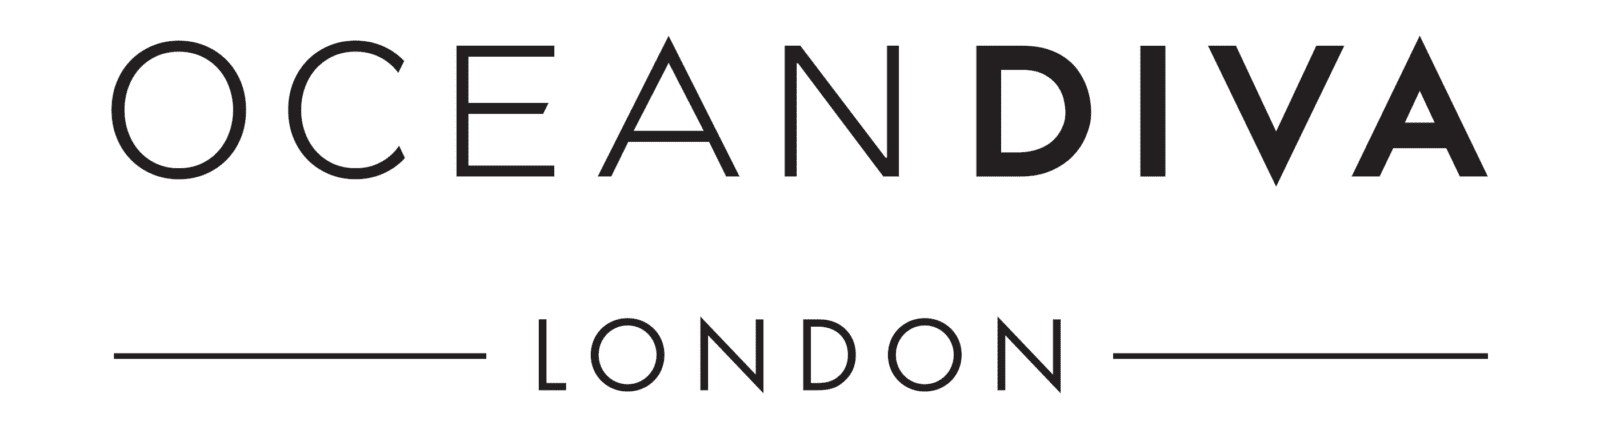 Oceandiva London Logo